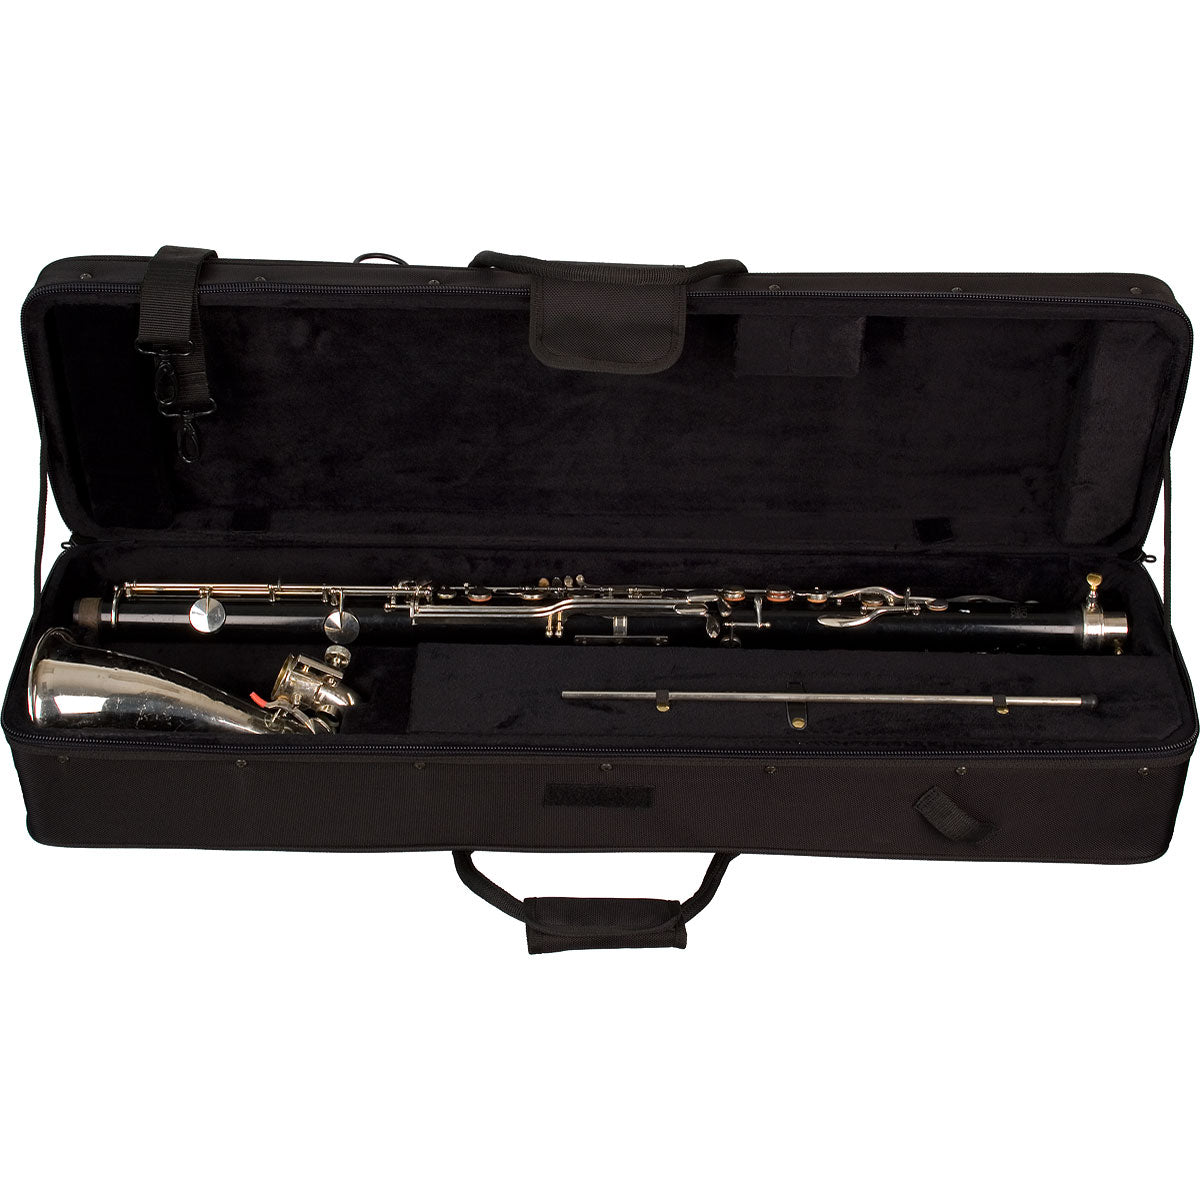 Protec Bass Clarinet Instrument Case PB319 - Premium Bass Clarinet Case from Protec - Just $159.95! Shop now at Poppa's Music